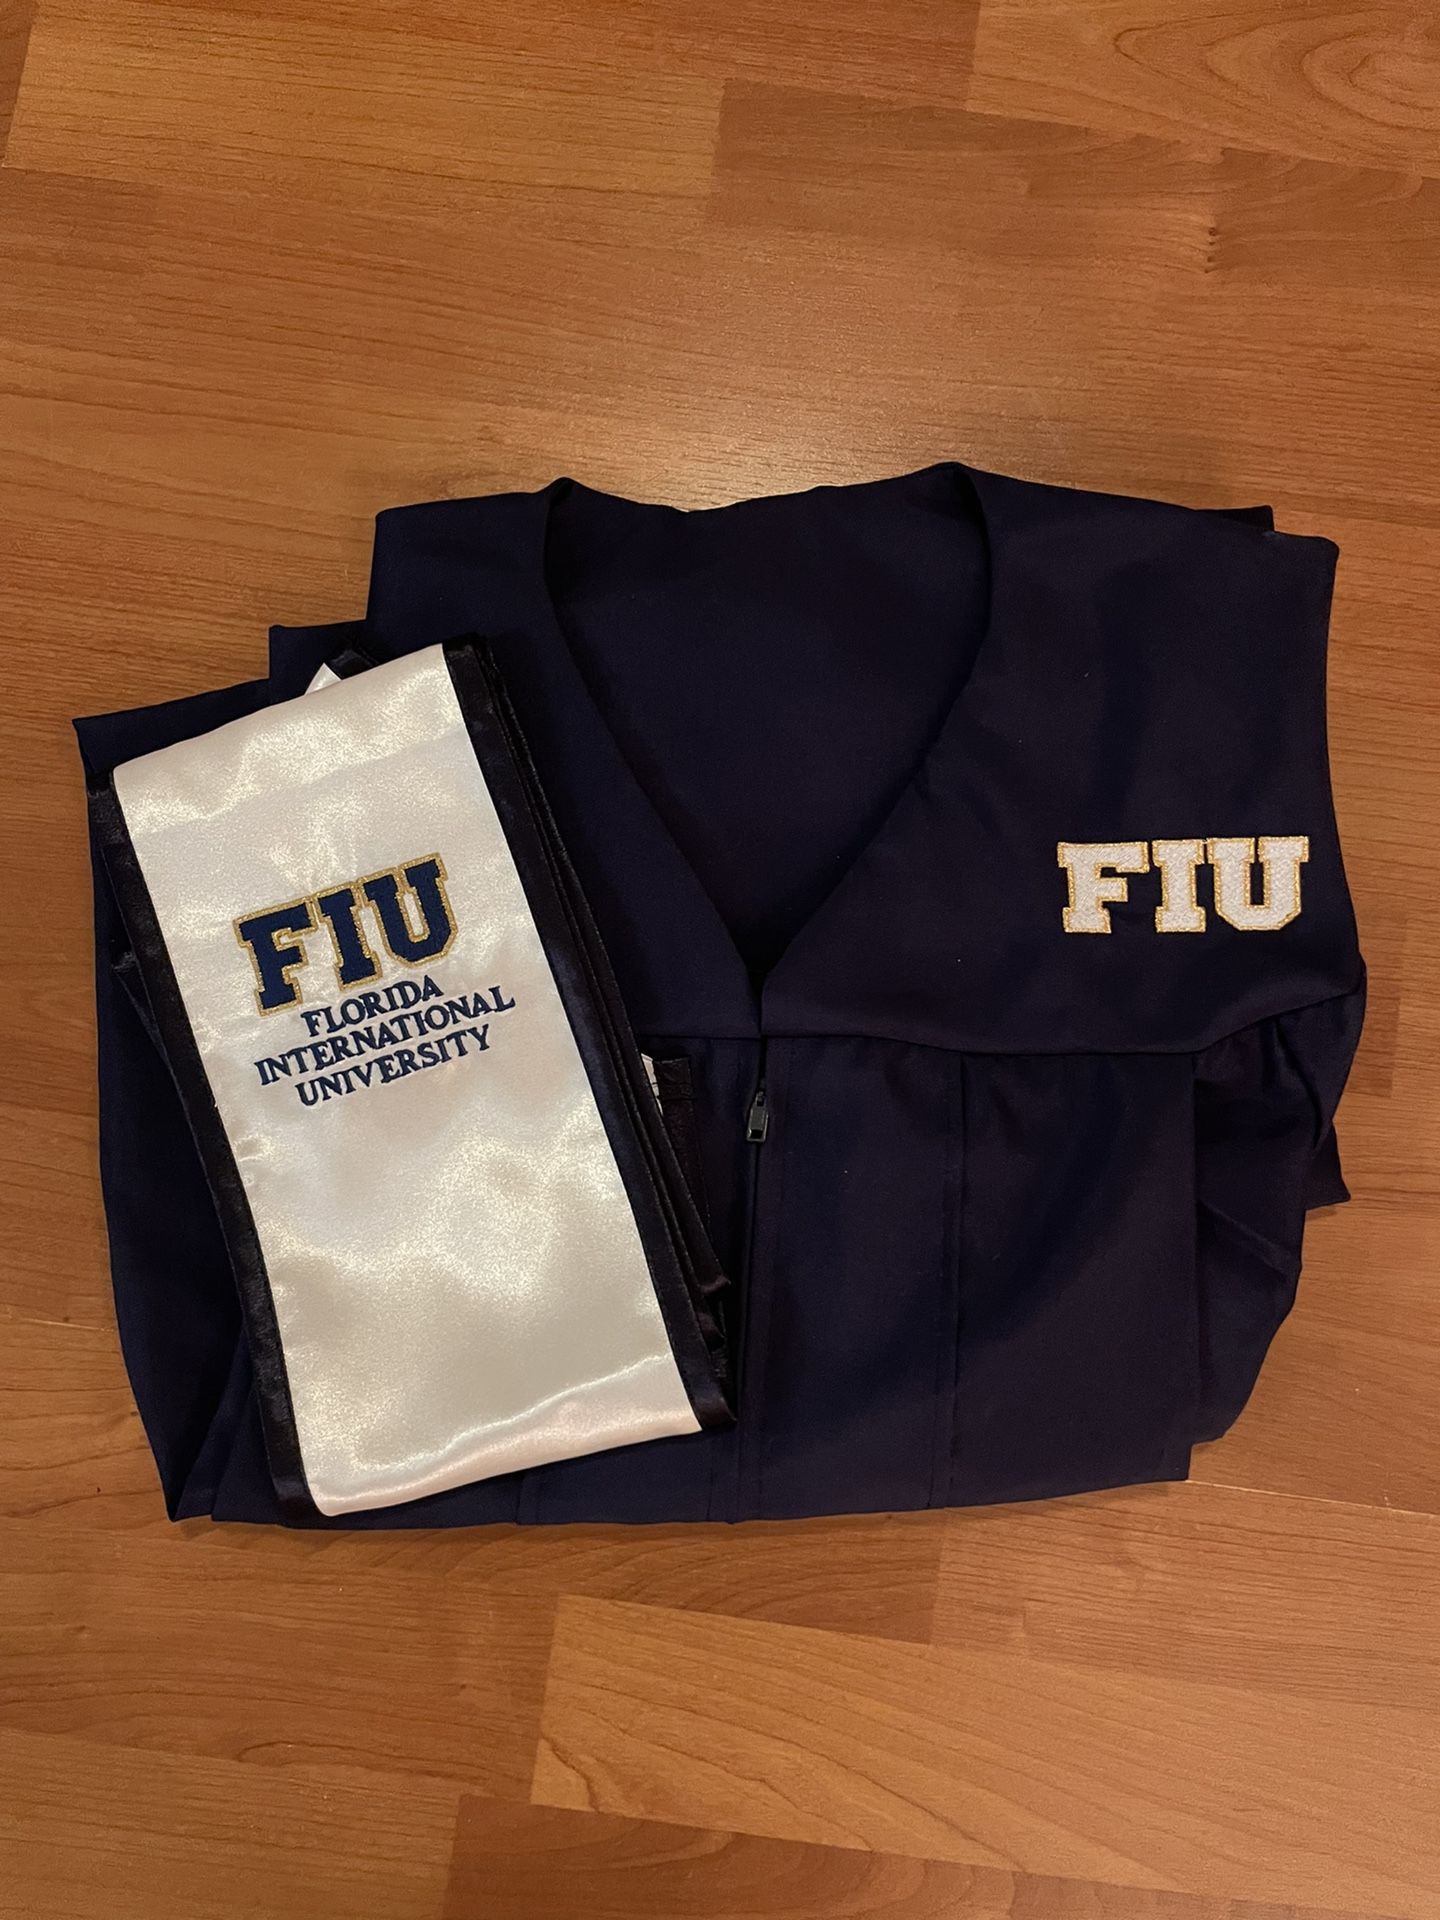 FIU- Florida International University Bachelors Gown & Stole 